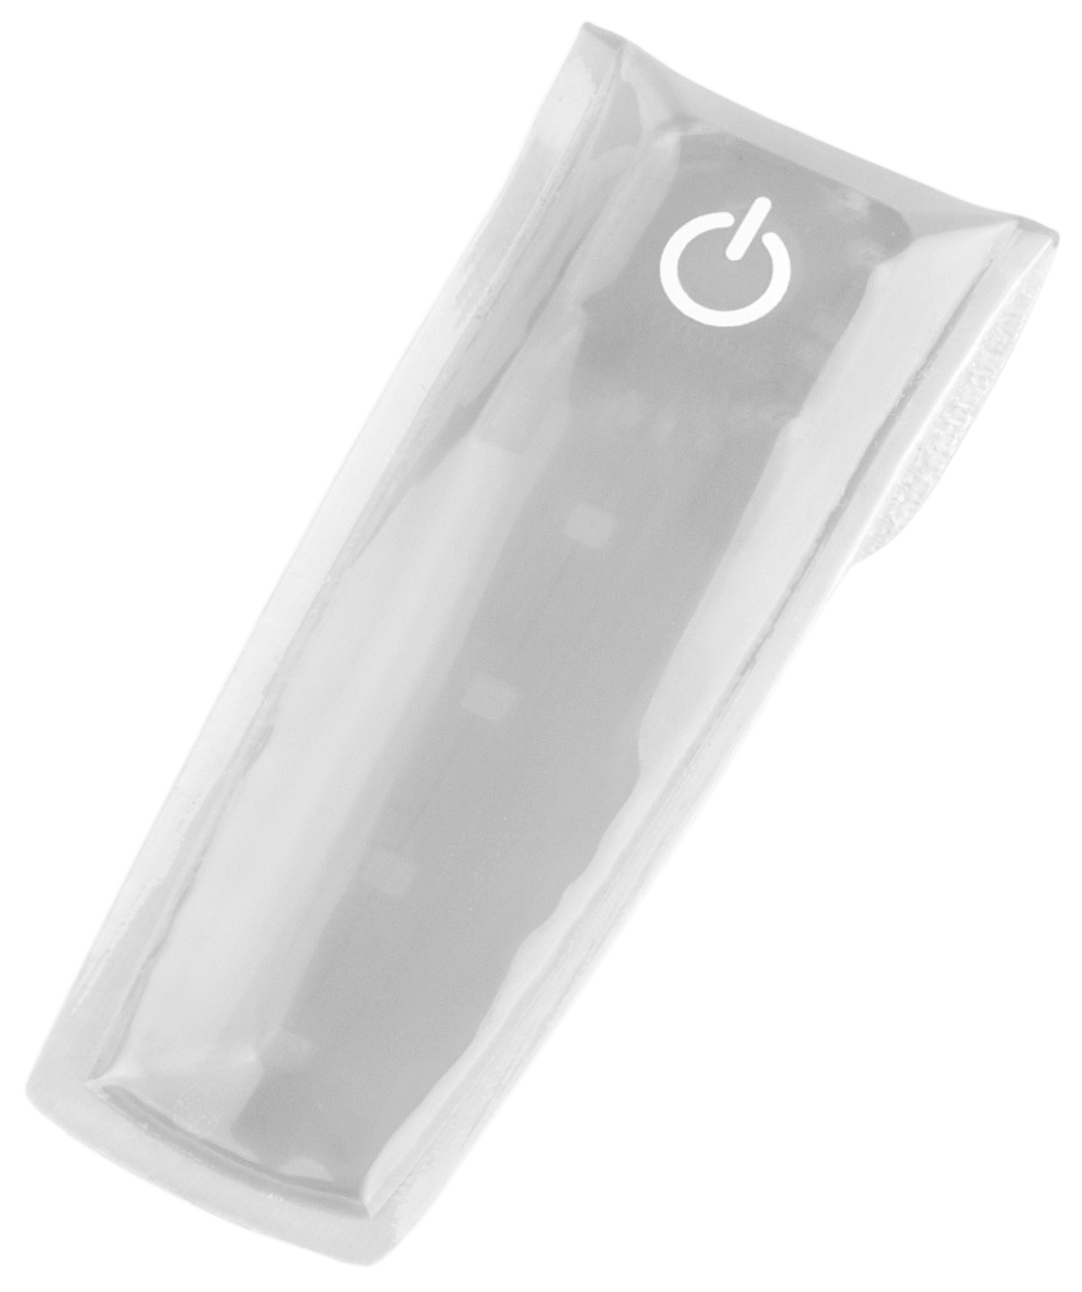 Multilight XL, LED-Clip silber